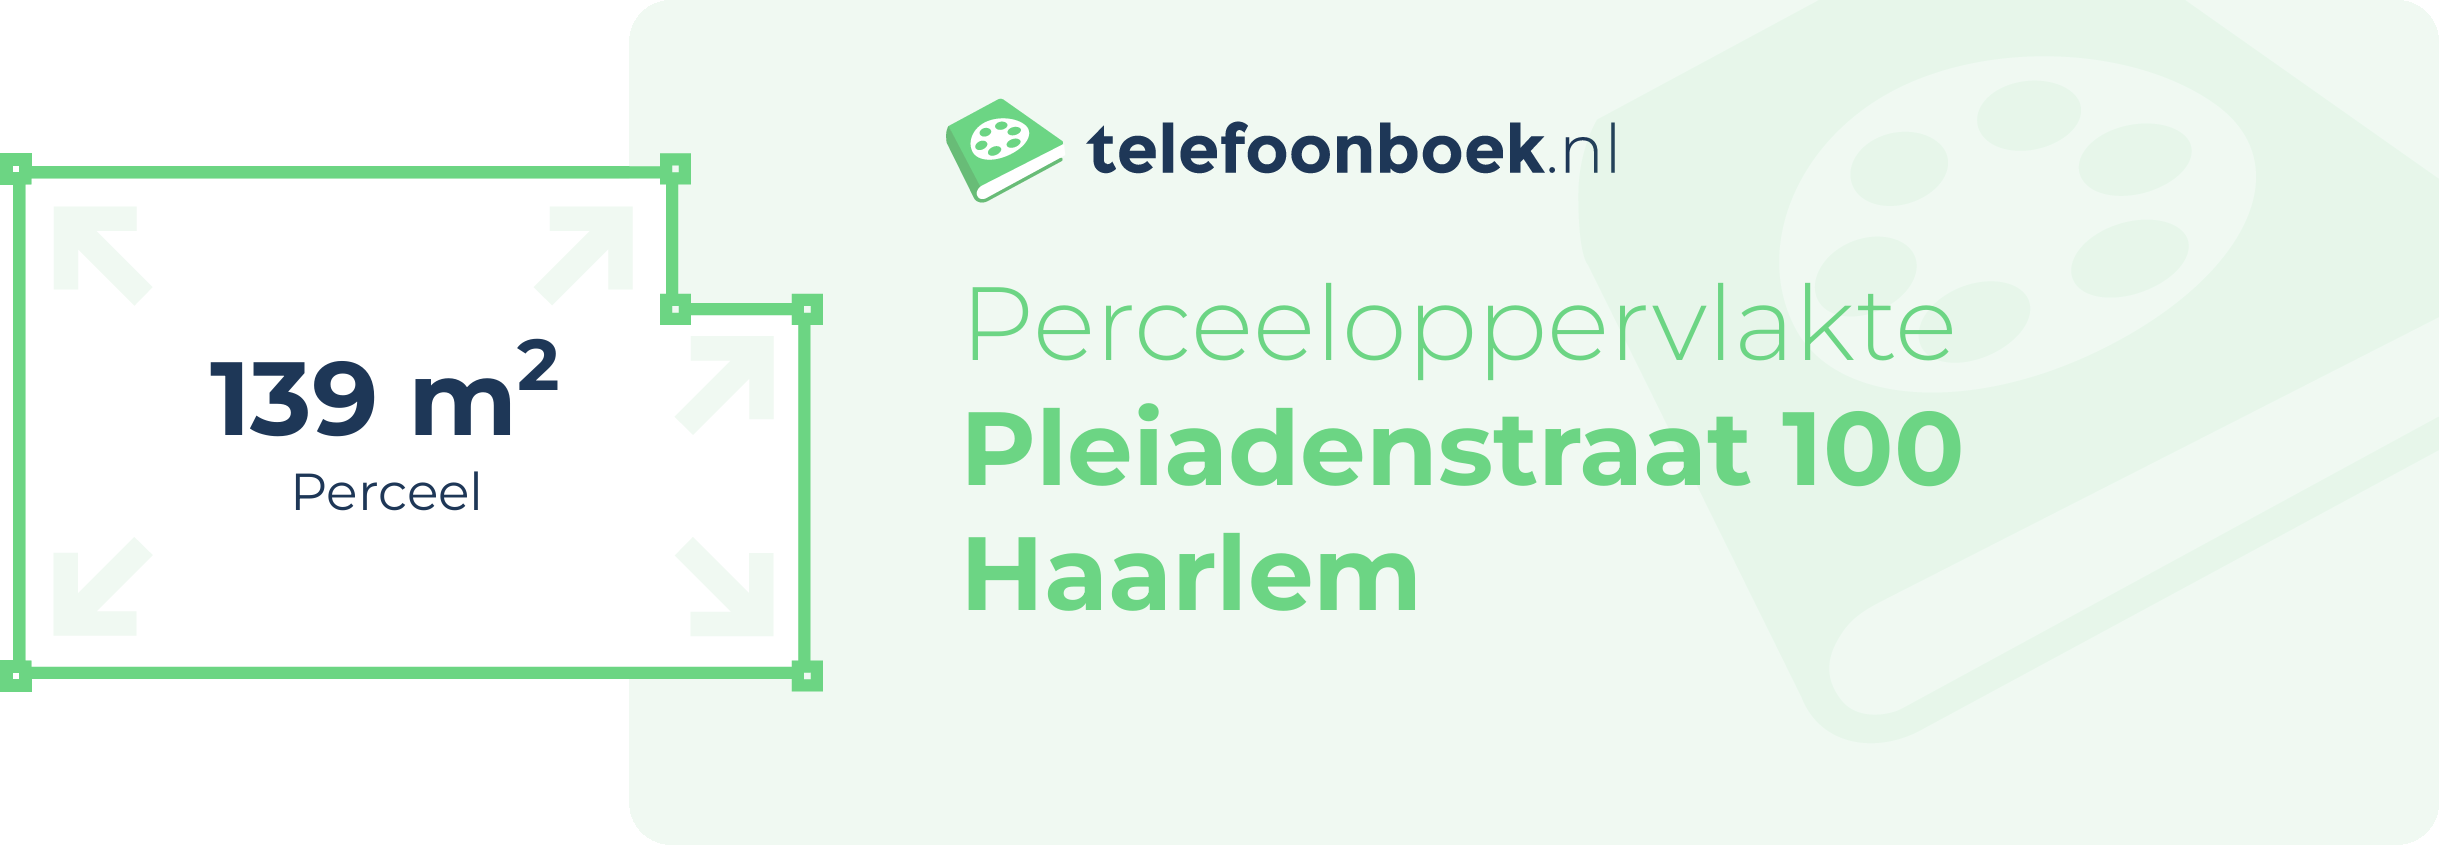 Perceeloppervlakte Pleiadenstraat 100 Haarlem